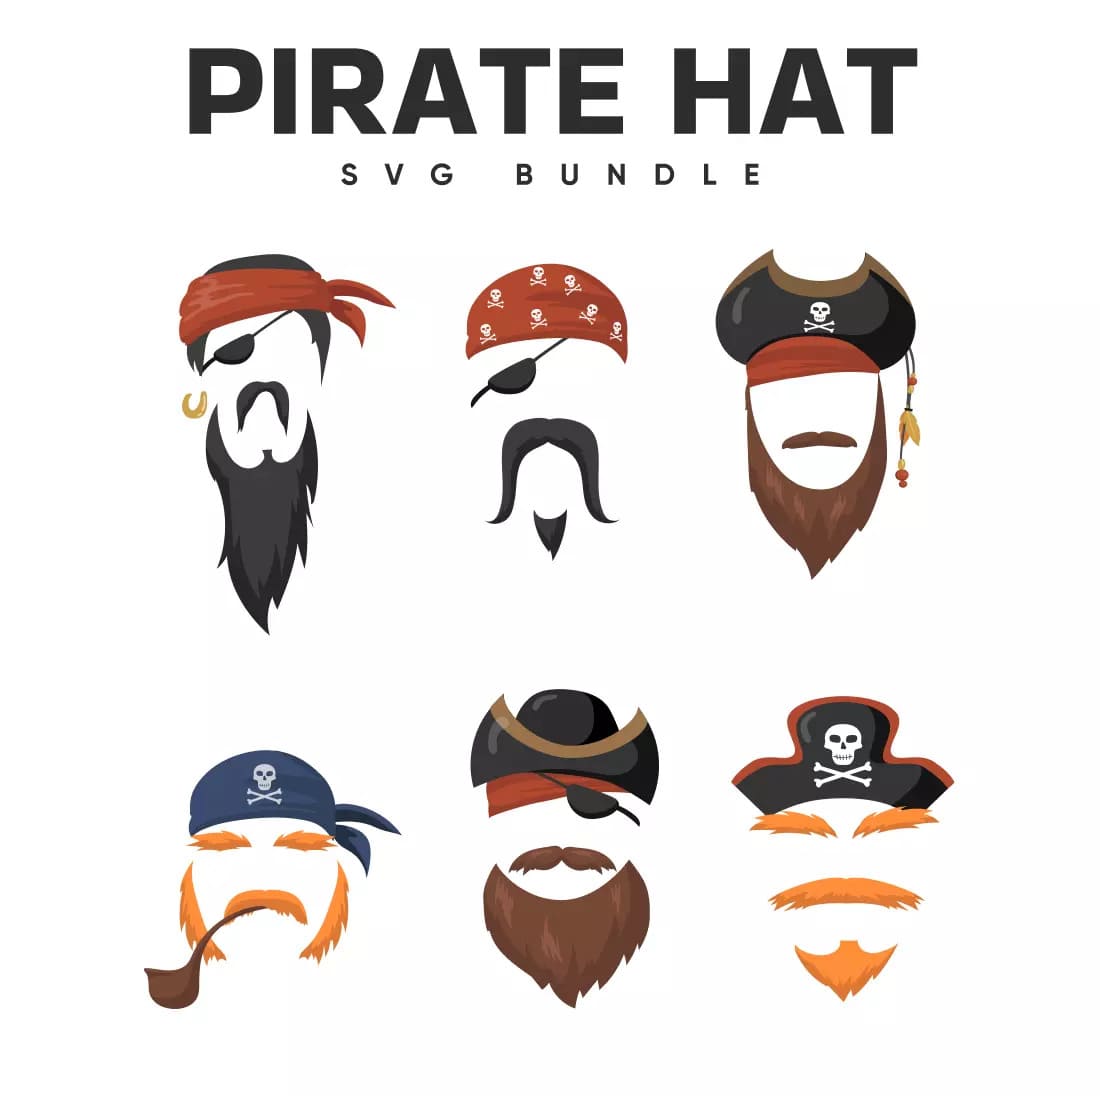 Pirate Hat SVG Bundle Preview image.